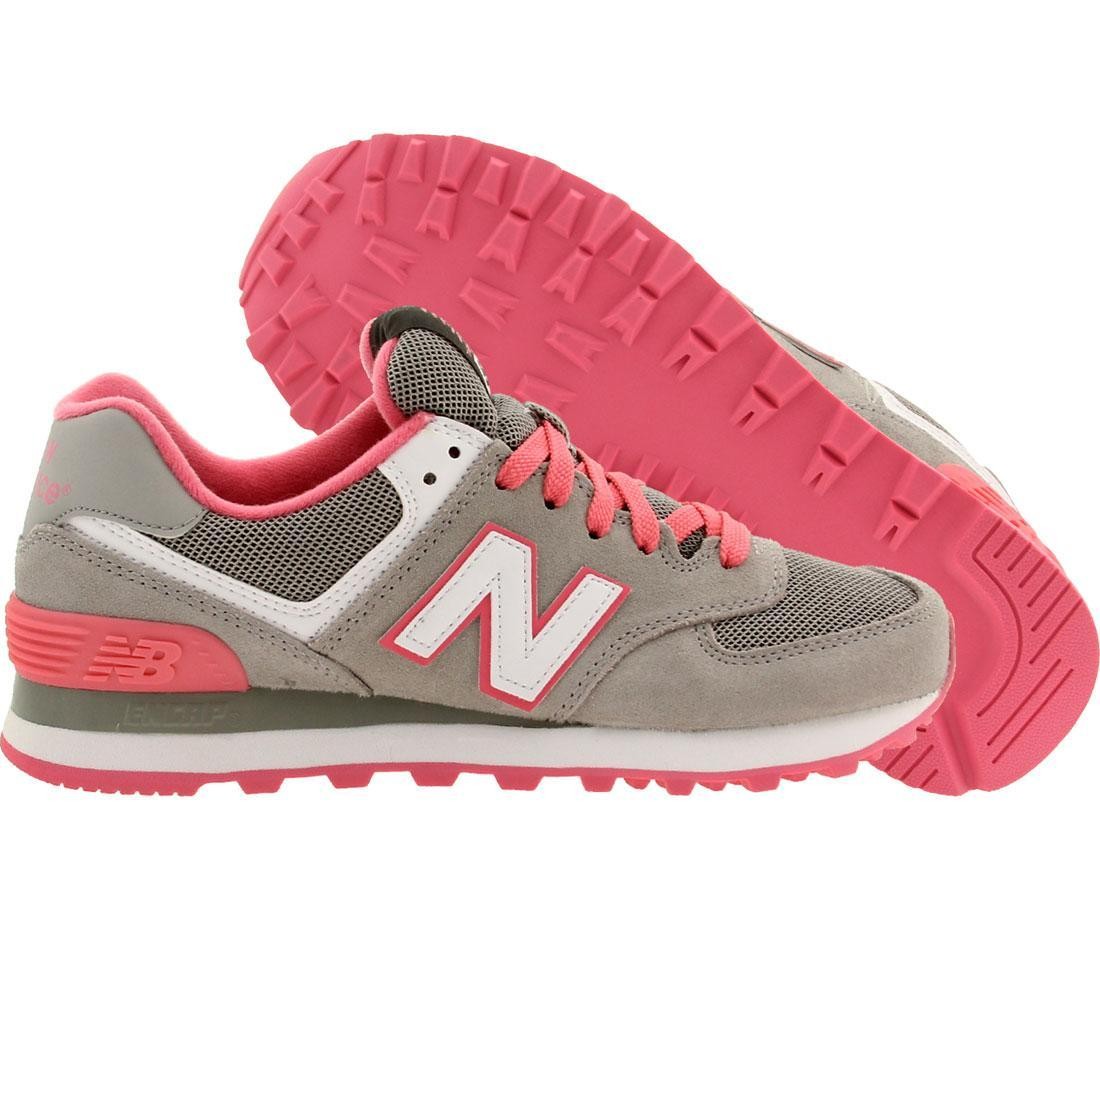 New Balance Women WL574CPF Core Plus gray pink 574 classic running ...